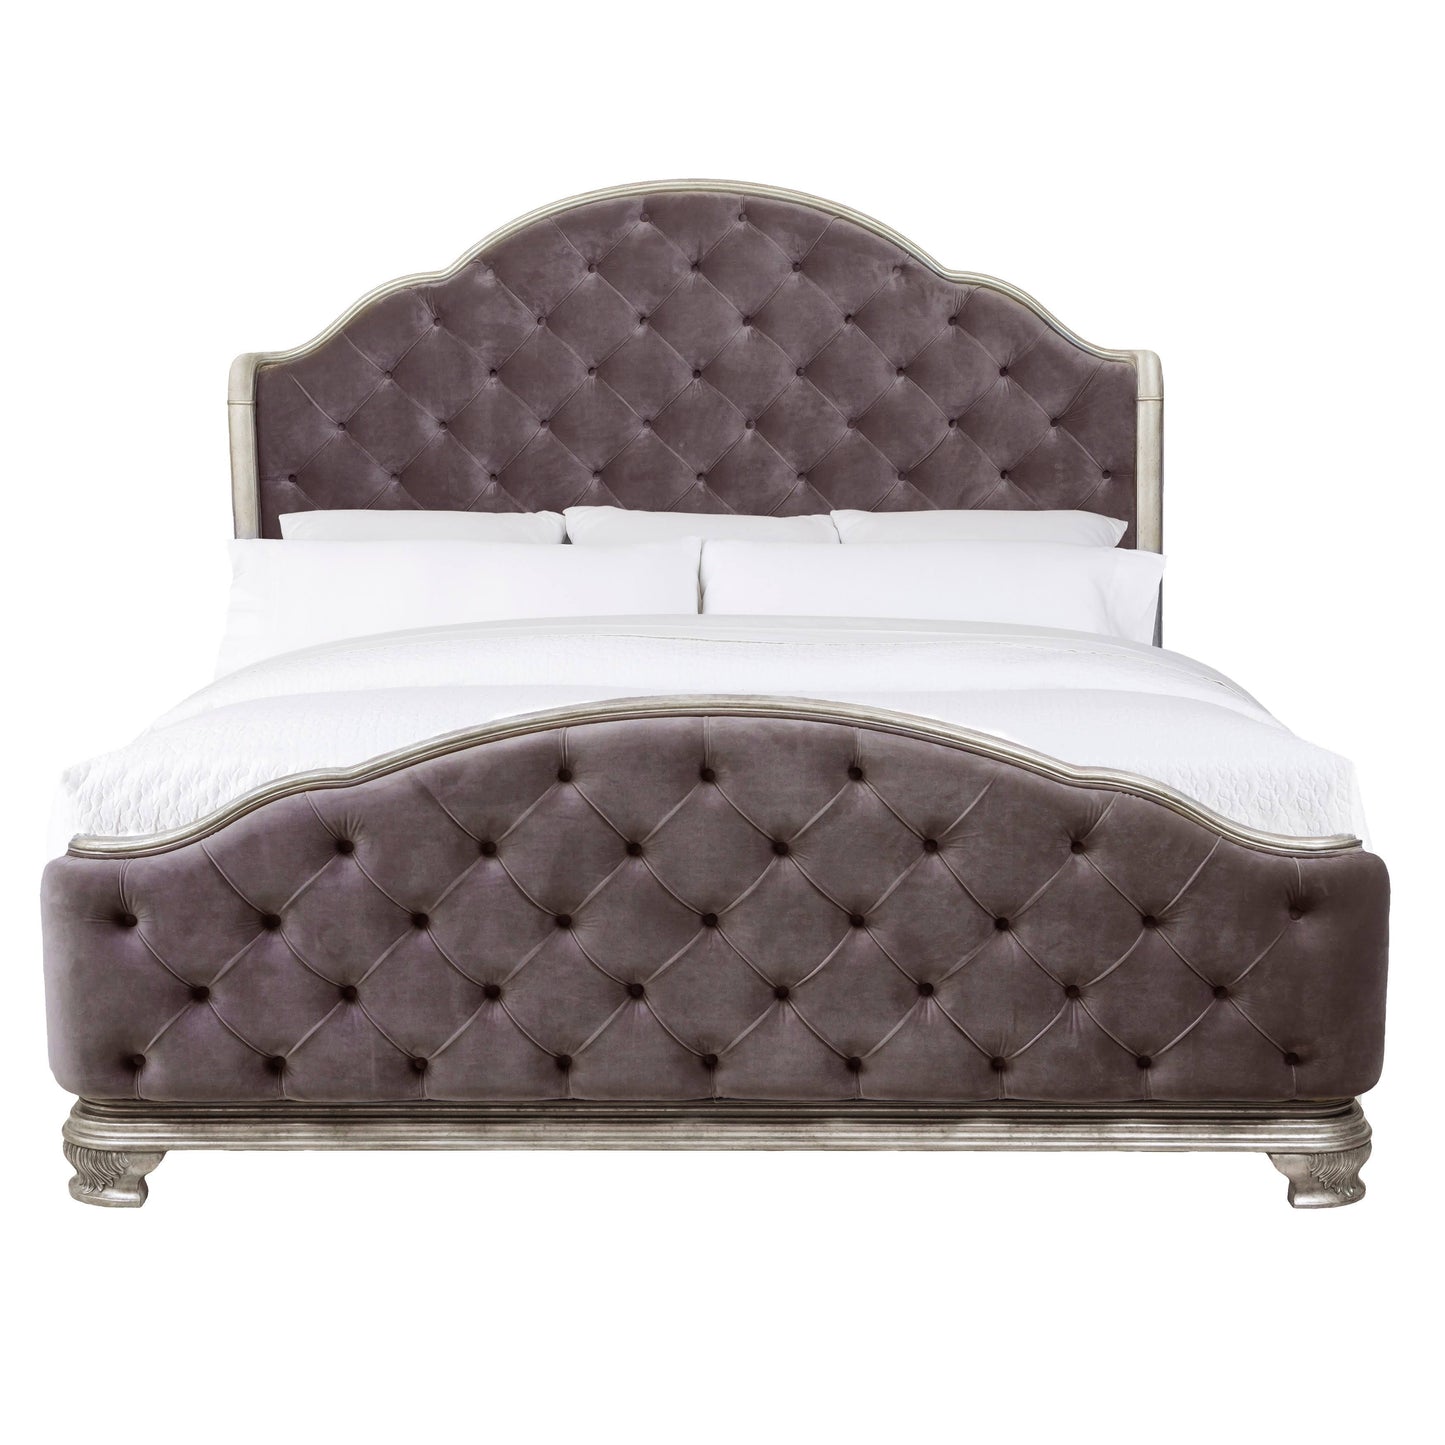 Furniture Rhianna Upholstered Bed, King